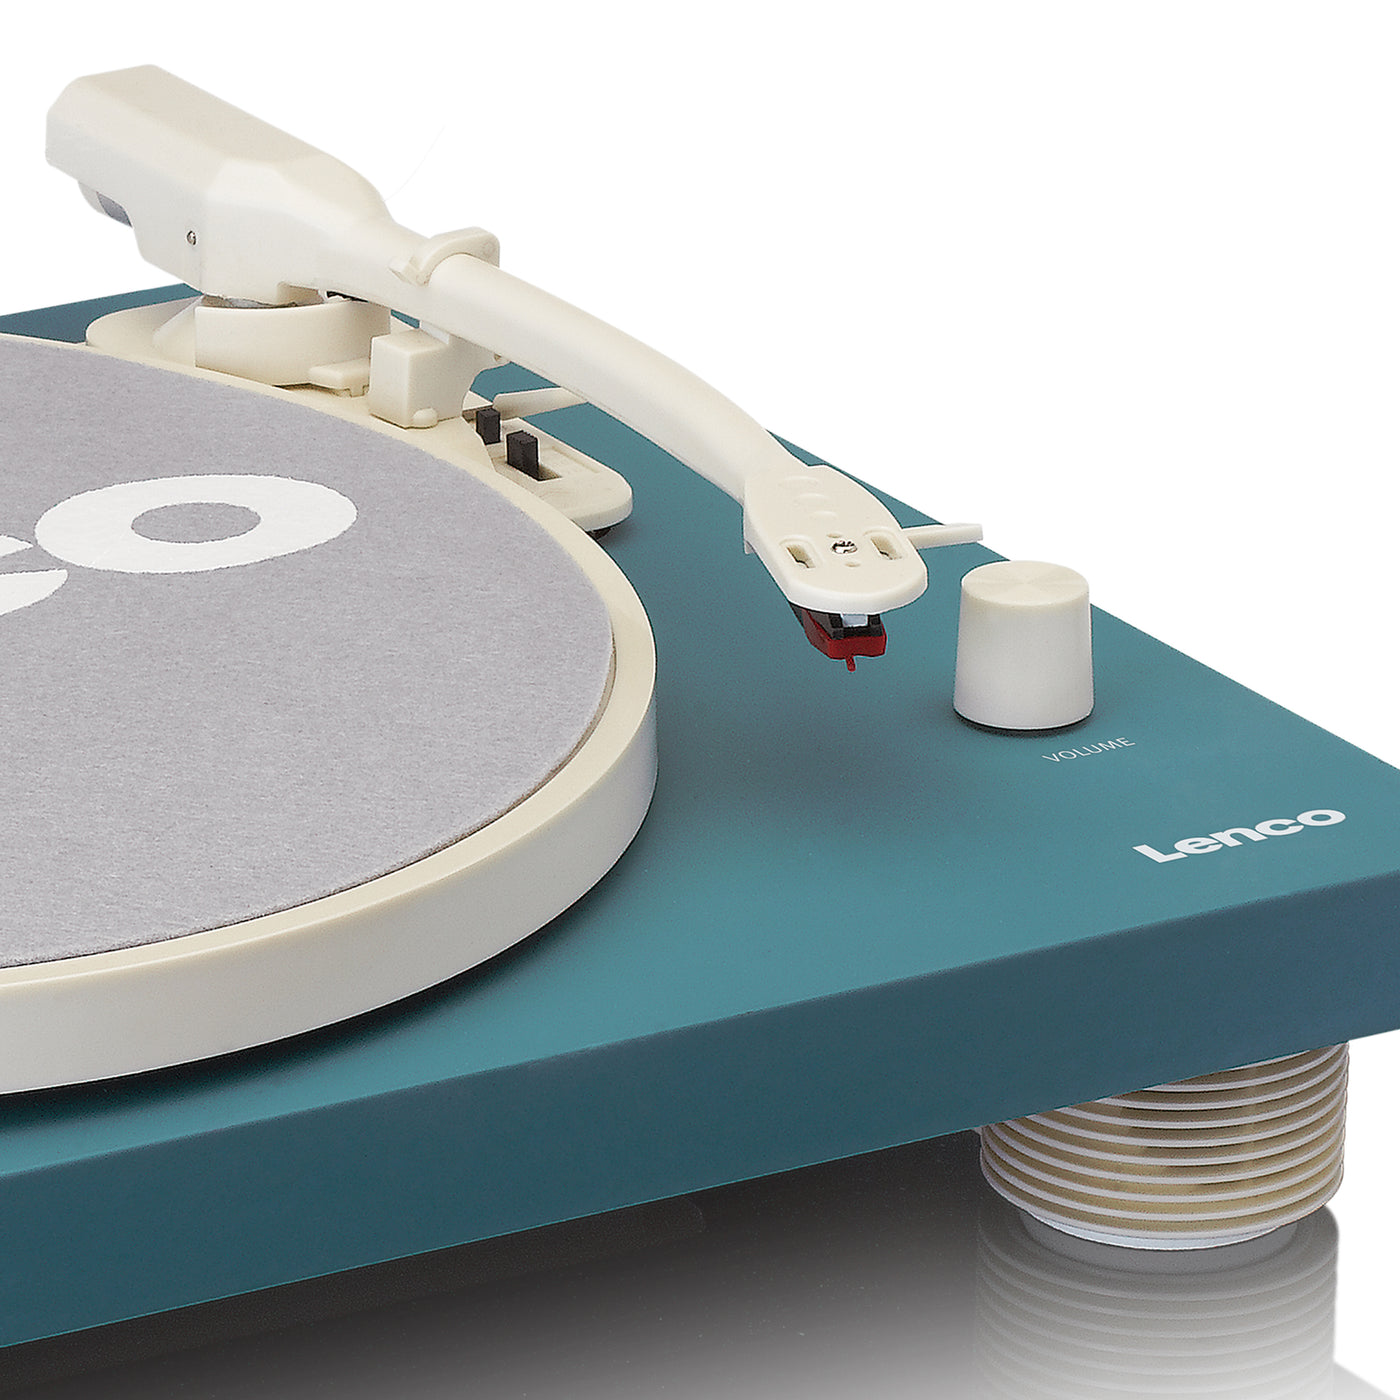 LENCO LS-50TQ - Platenspeler mét ingebouwde speakers USB Encoding - Turquoise